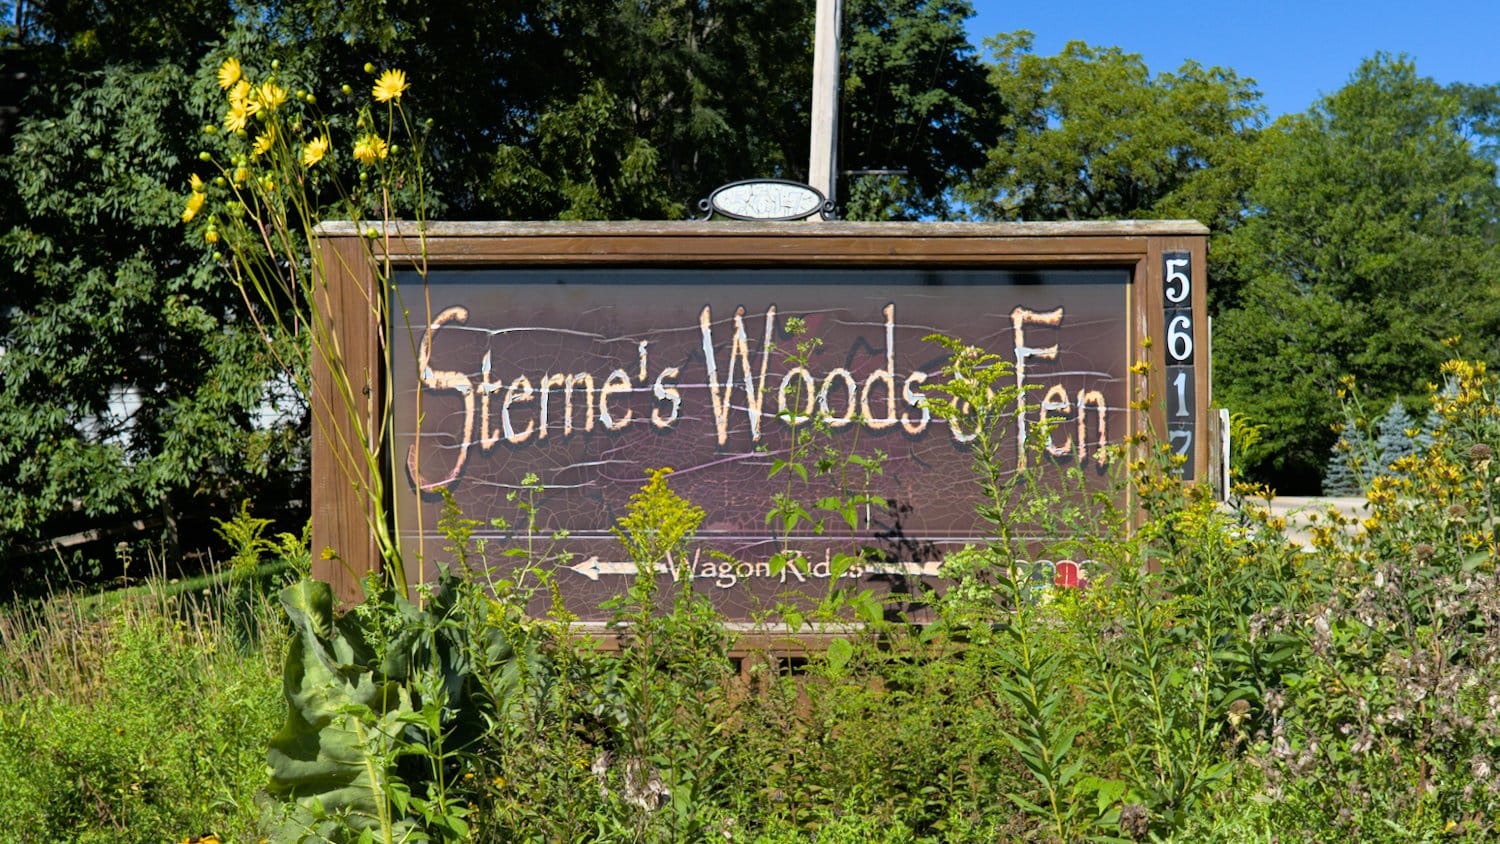 Partially hidden Sterne's Woods & Fen entrance sign.